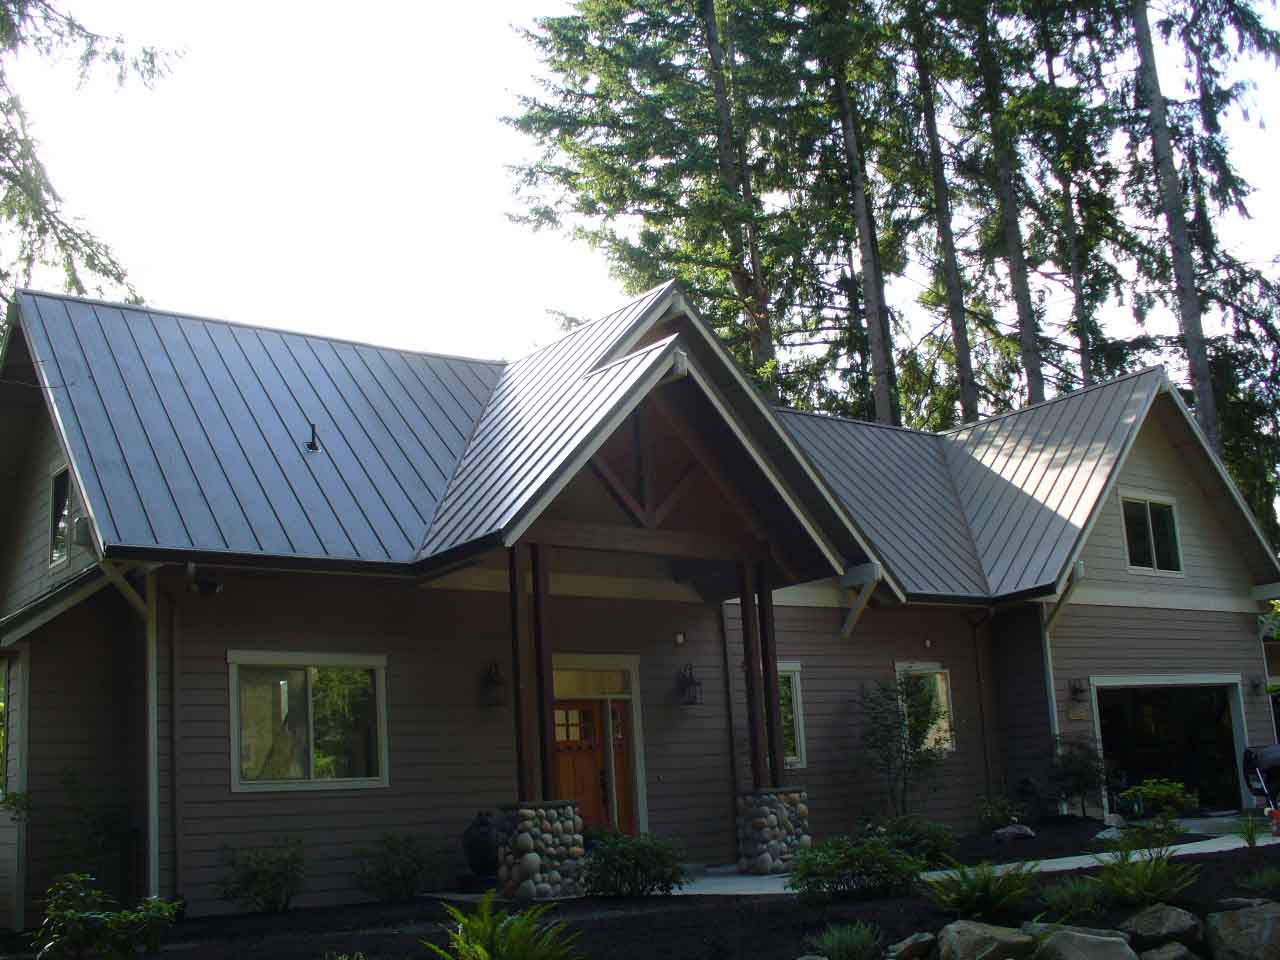 Wonderful home with Loc-Seam roof